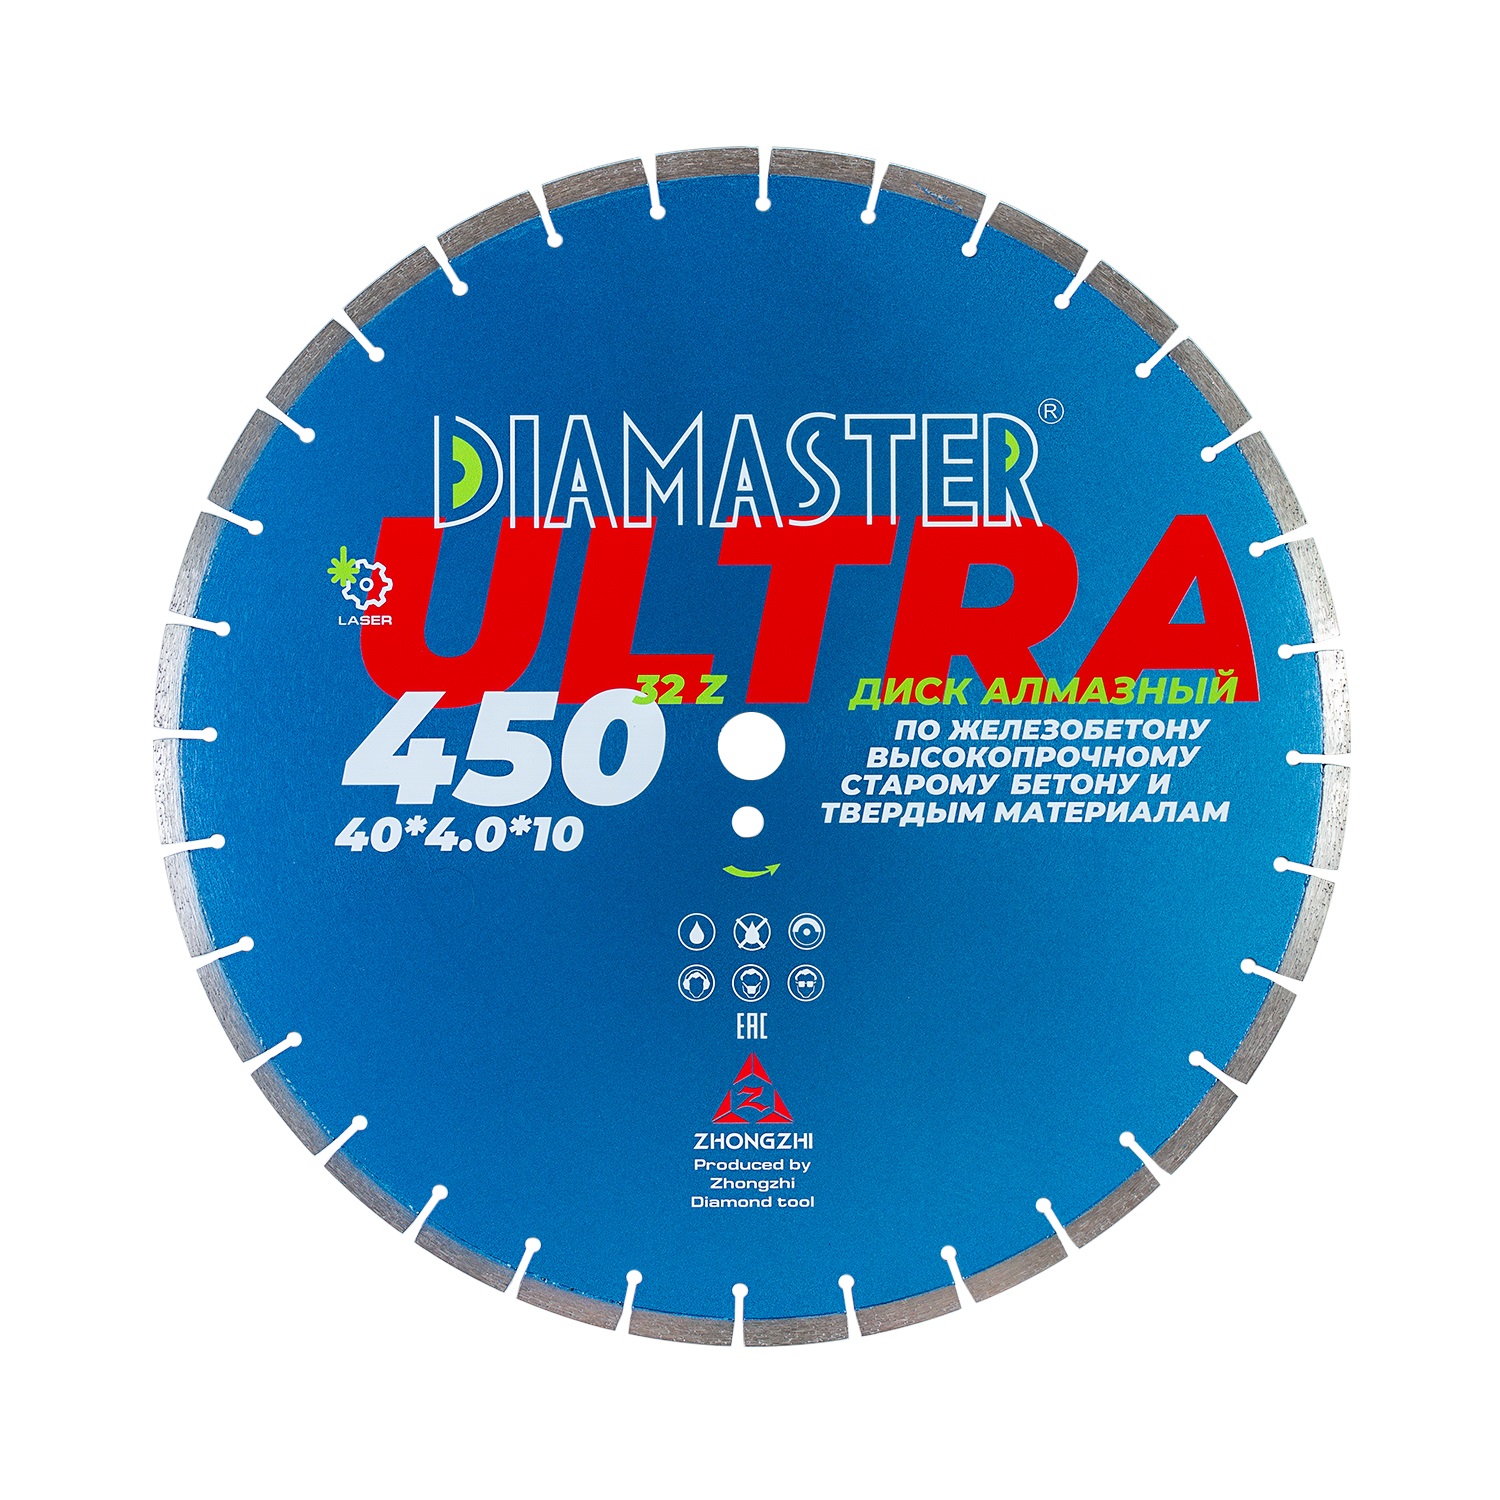 Диск сегментный Laser ULTRA д.450*2,8*25,4 (40*4,0*10)мм | 32z/железобетон/wet/dry DIAMASTER диск турбо wave gold д 230 22 2 2 8 7 мм универсал dry diamaster